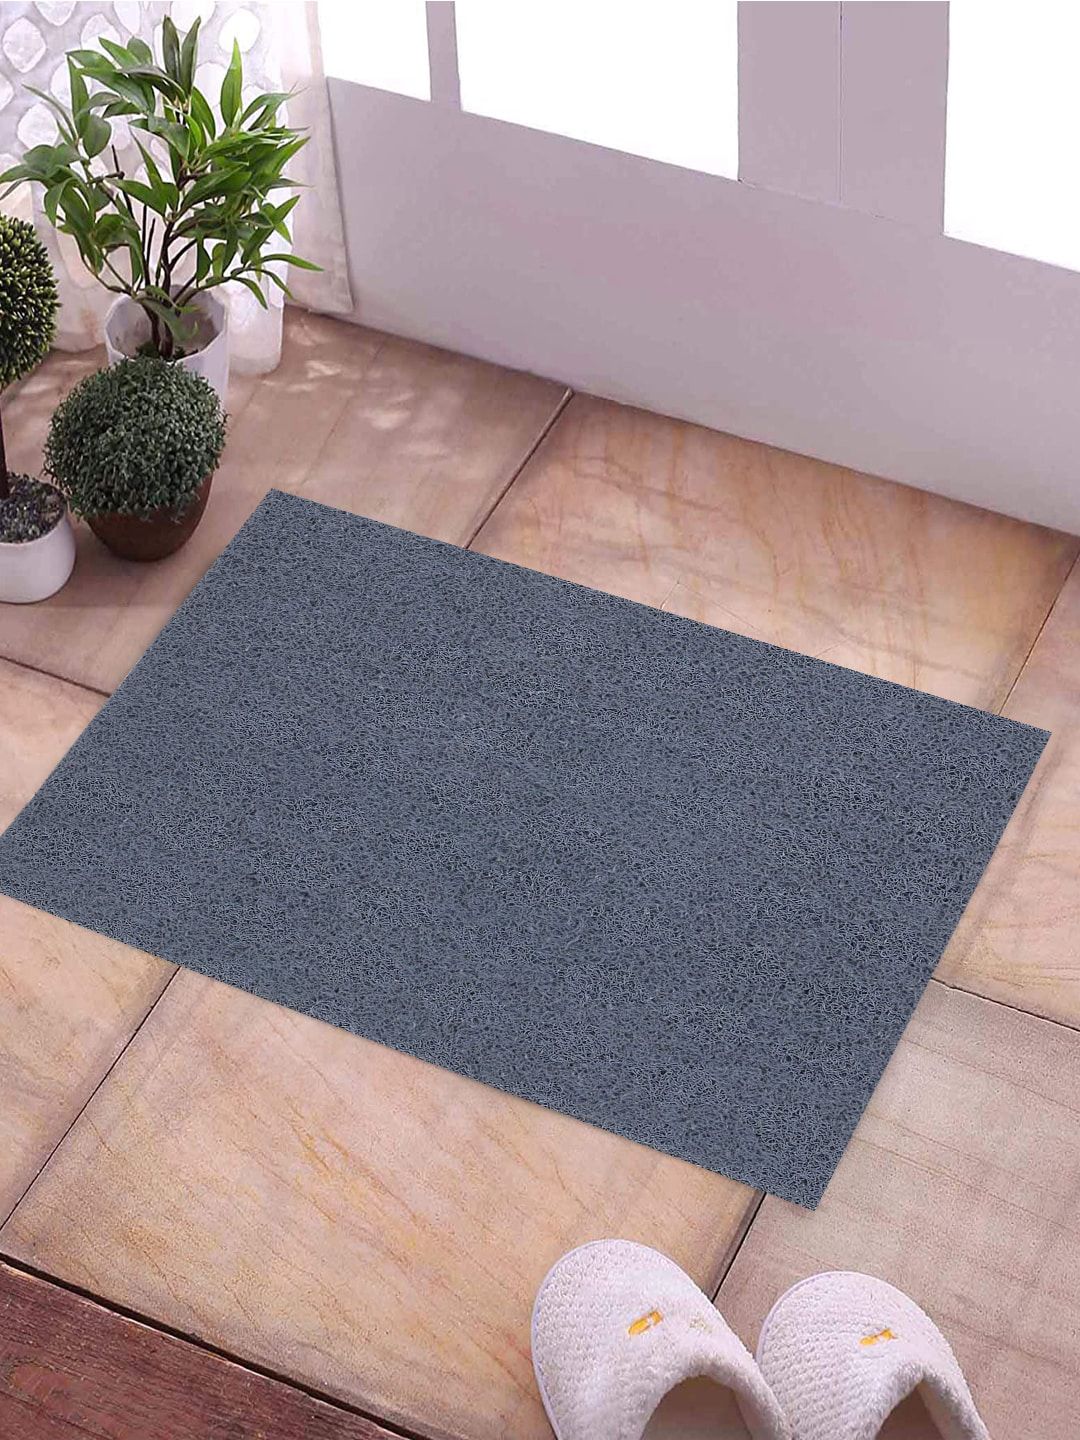 Kuber Industries Grey Solid Rubber Anti-Skid Doormat Price in India